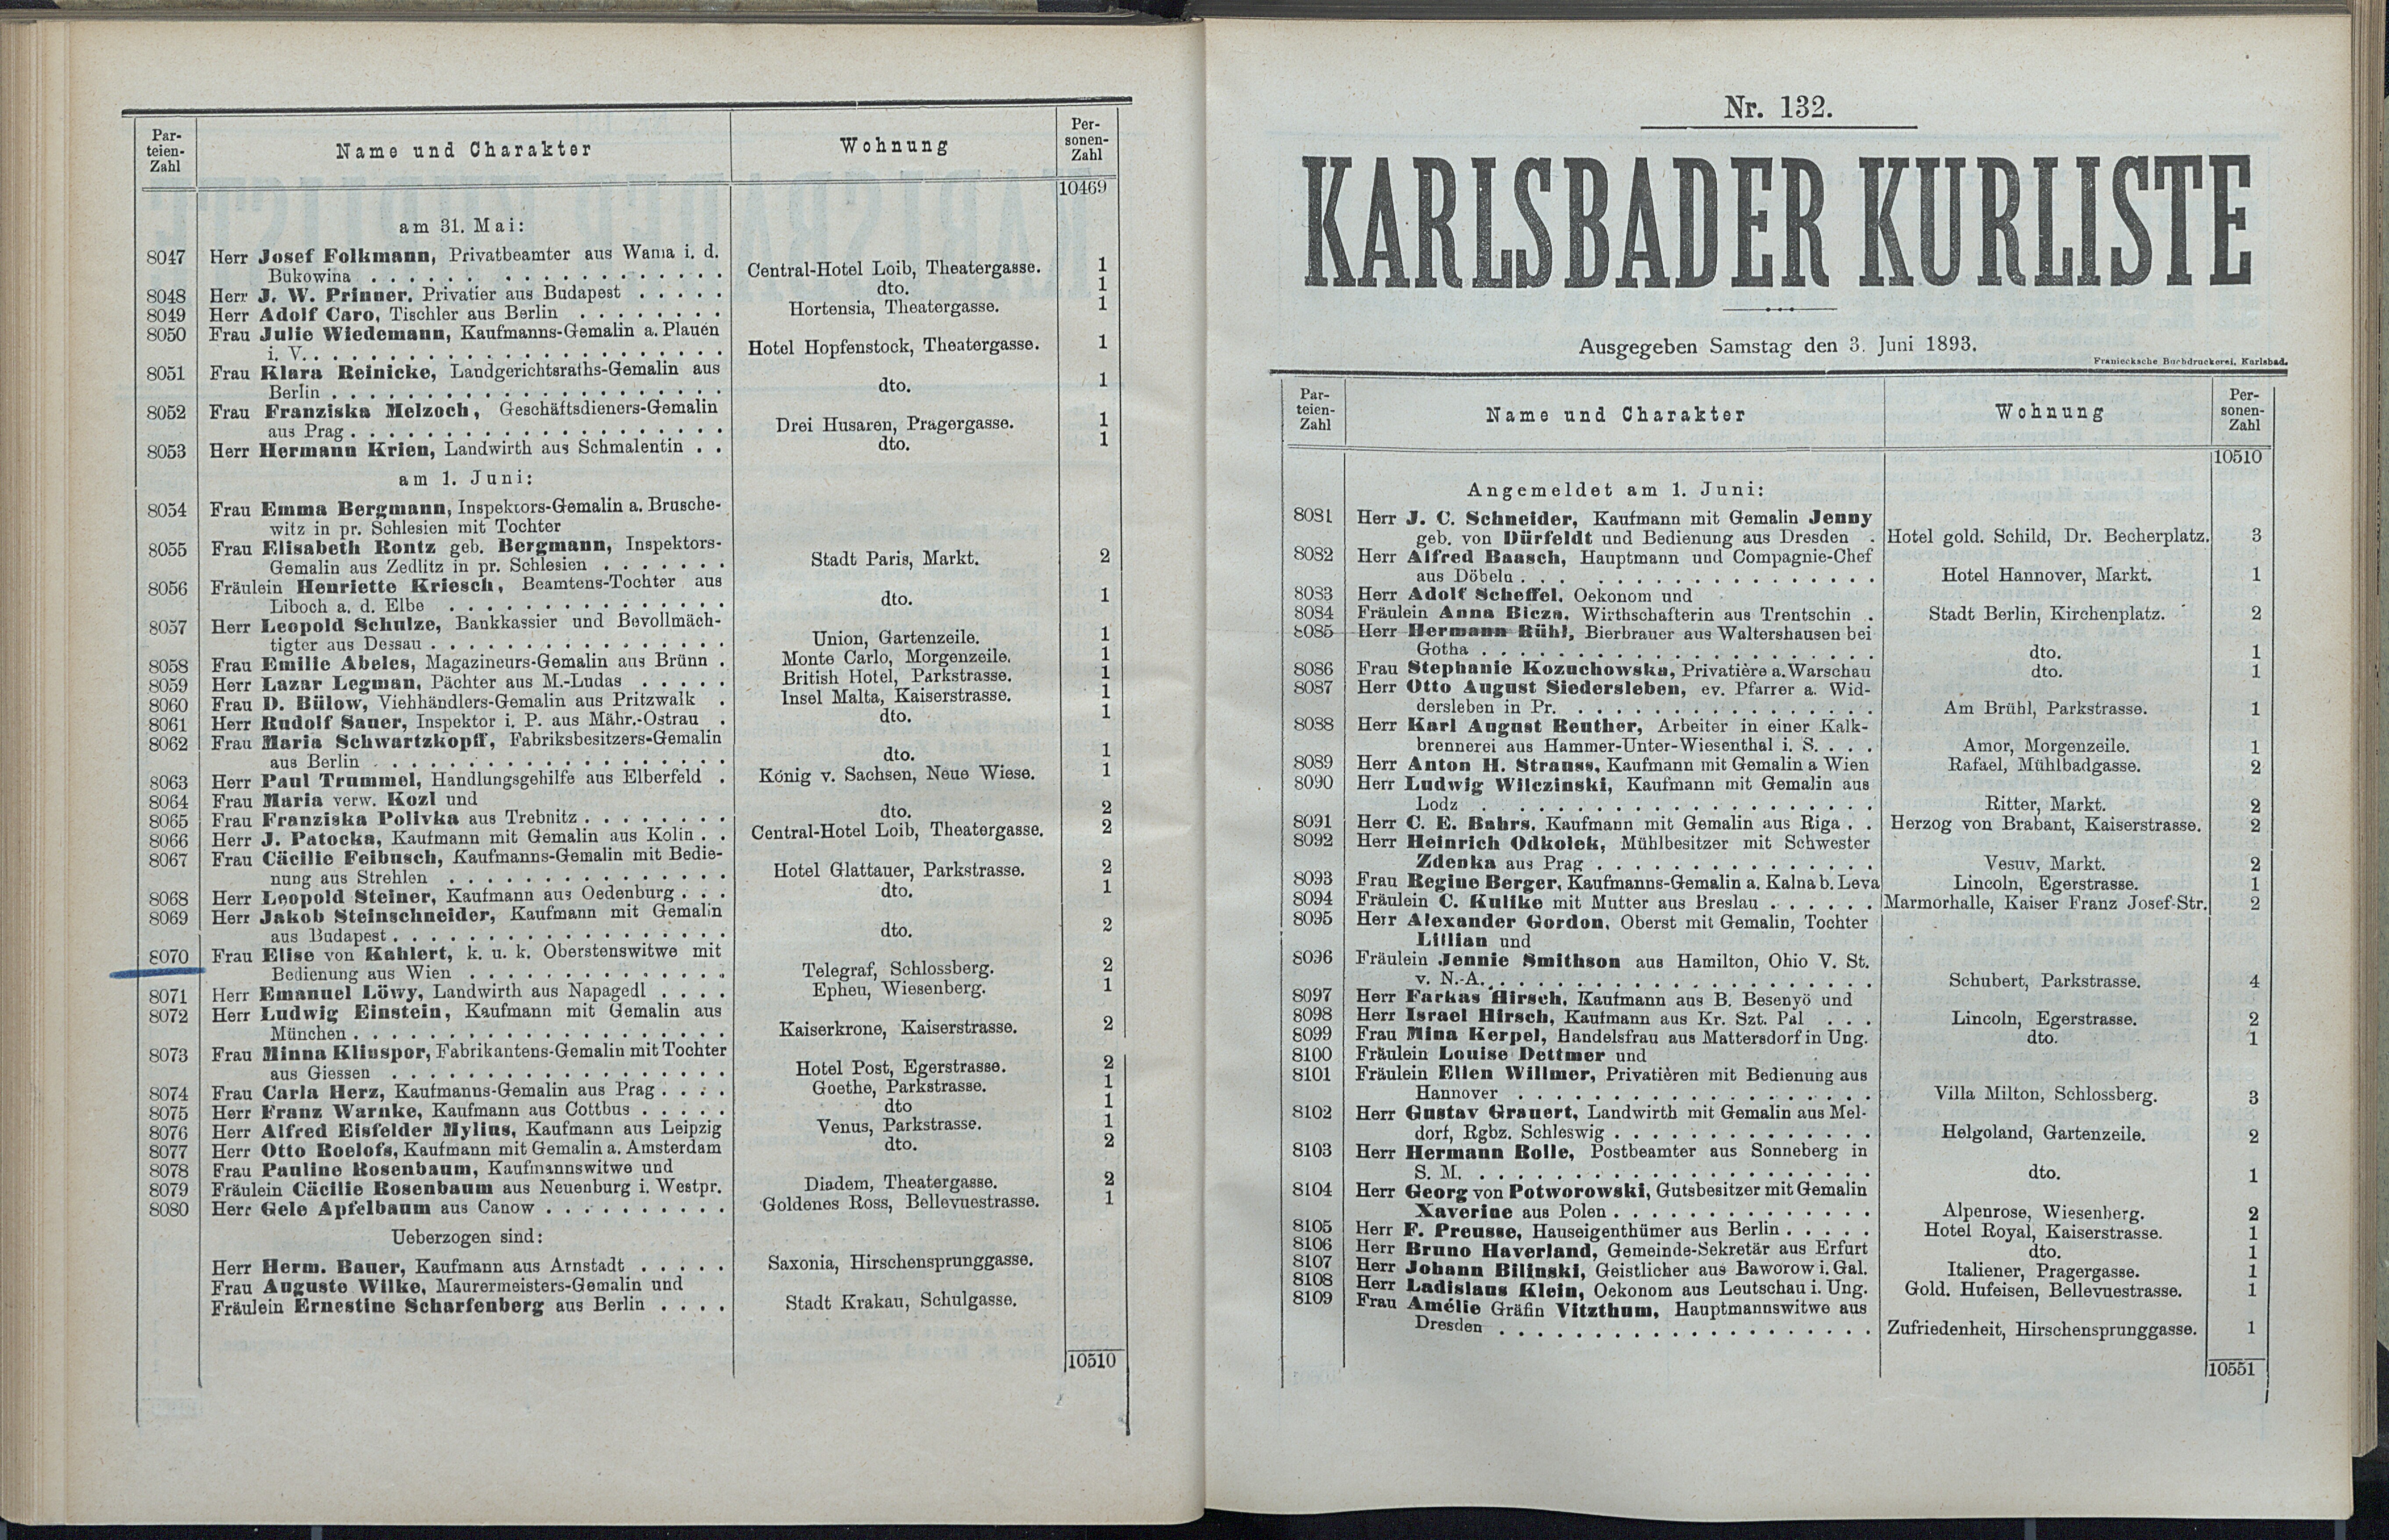 149. soap-kv_knihovna_karlsbader-kurliste-1893_1500